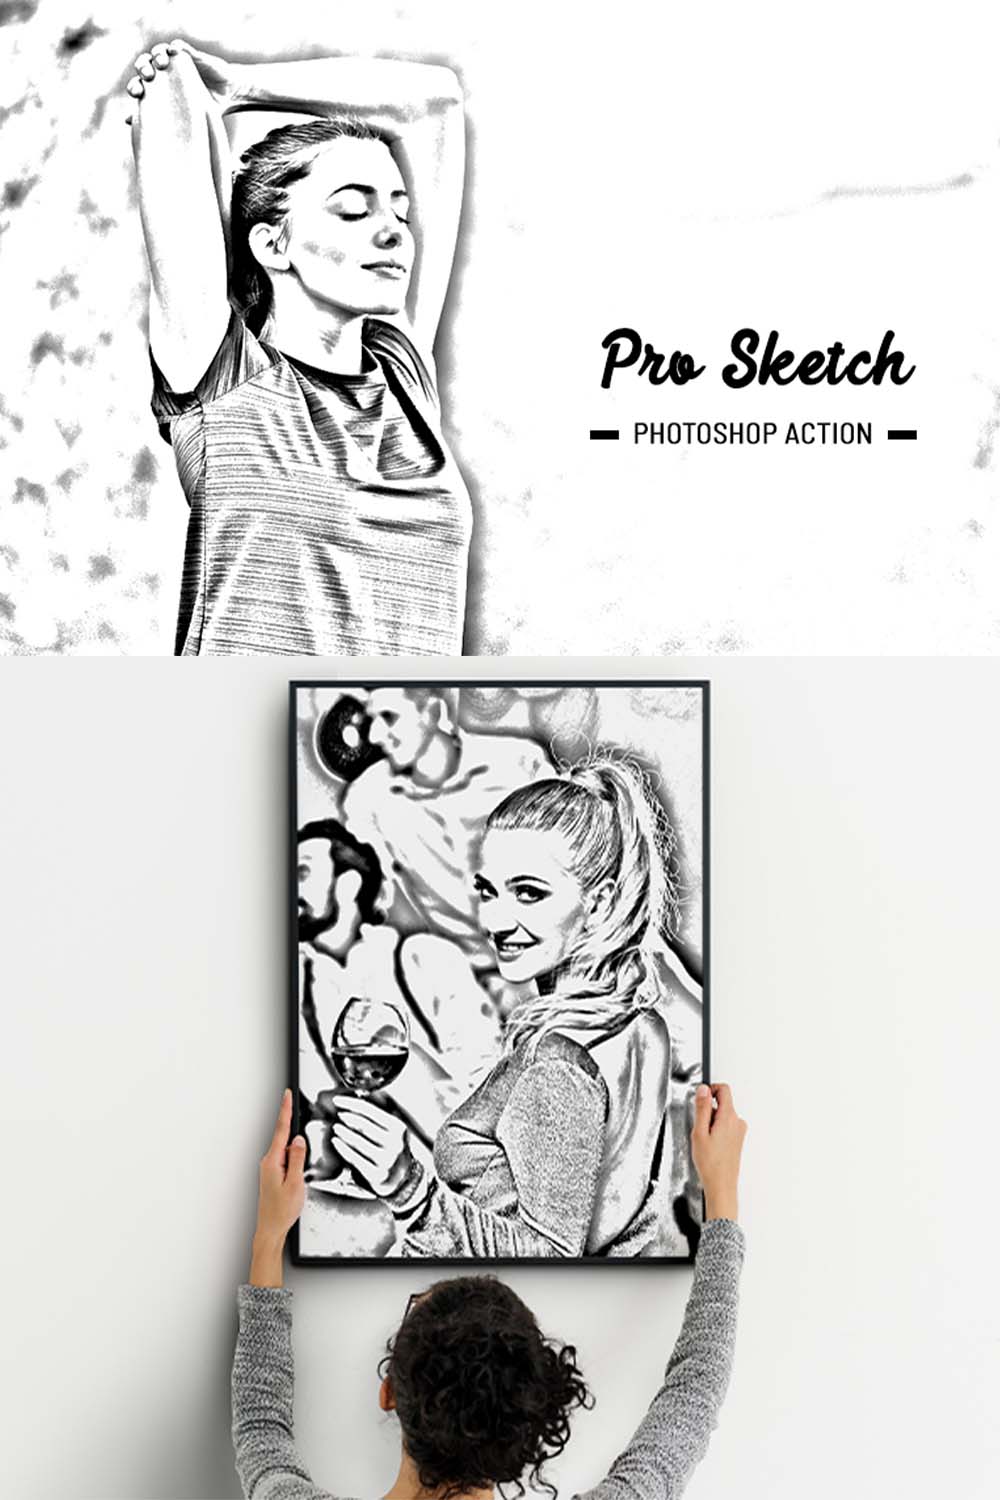 Pro Sketch Photoshop Action pinterest preview image.